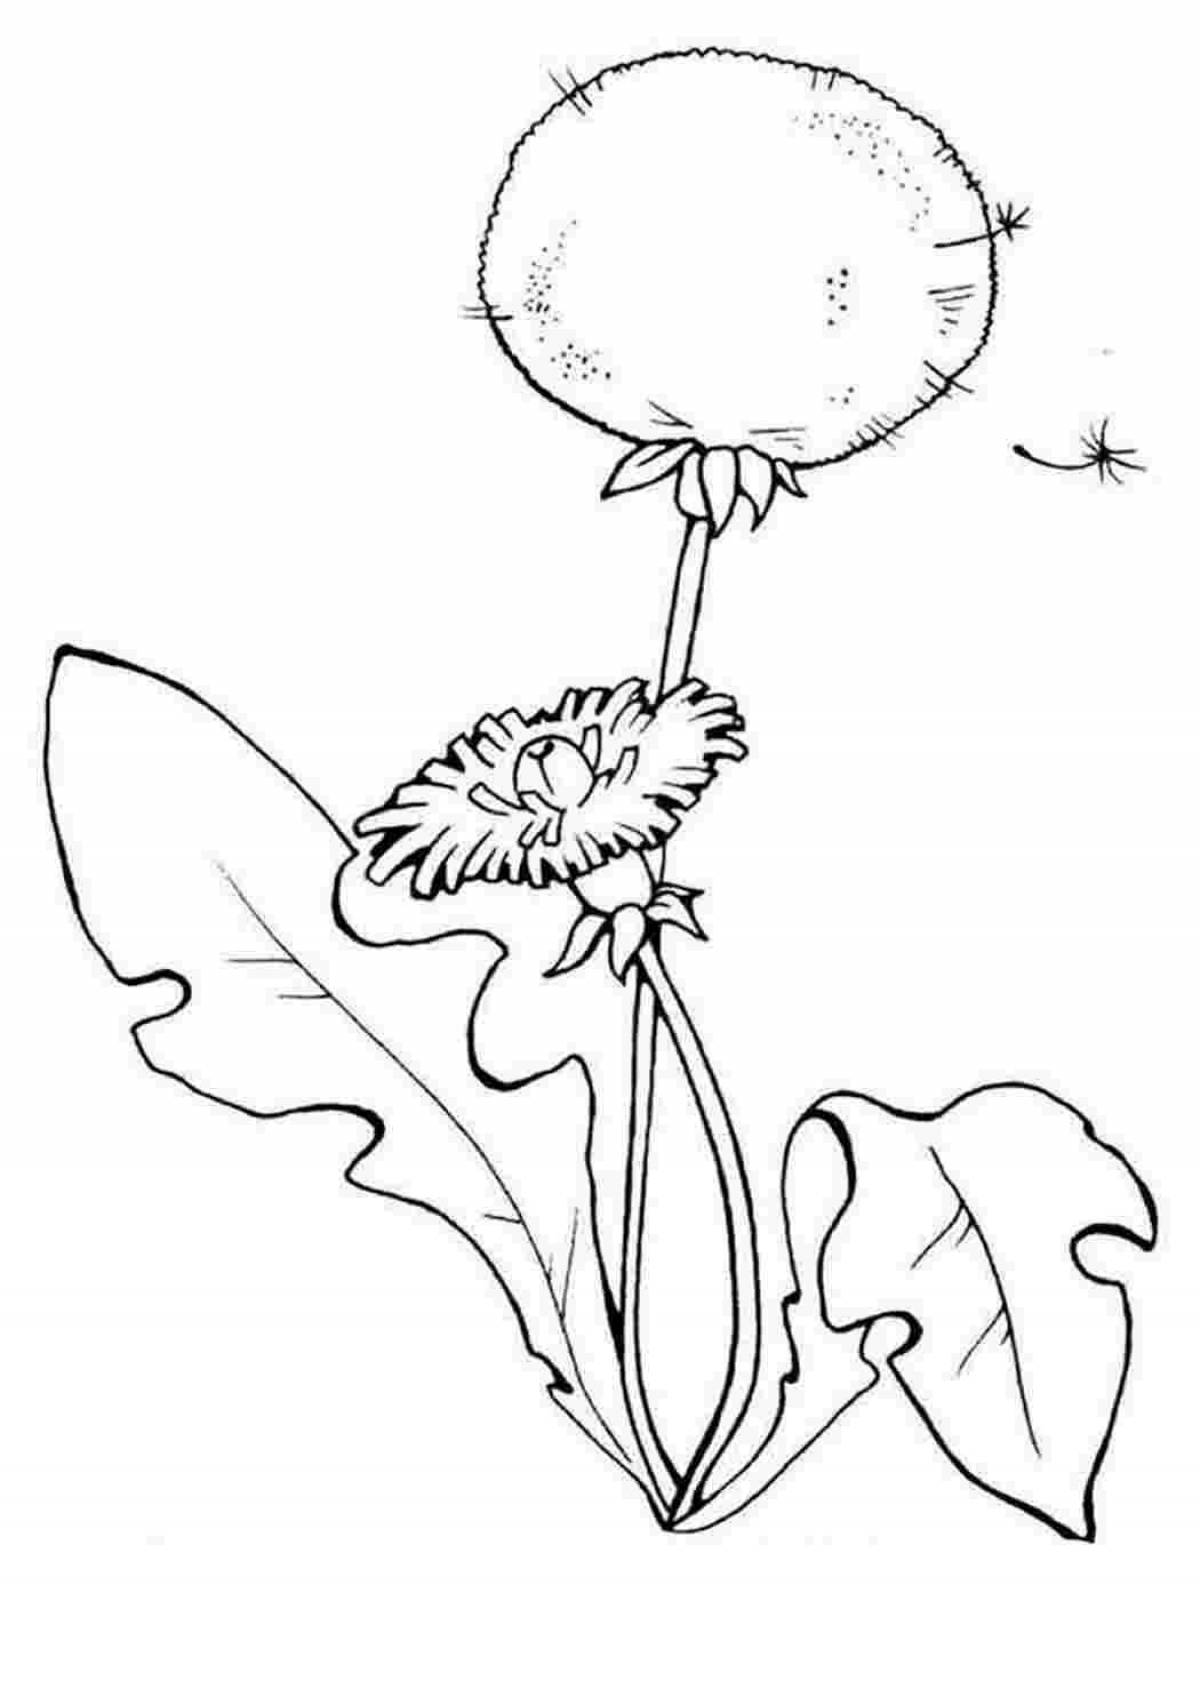 Amazing dandelion coloring page